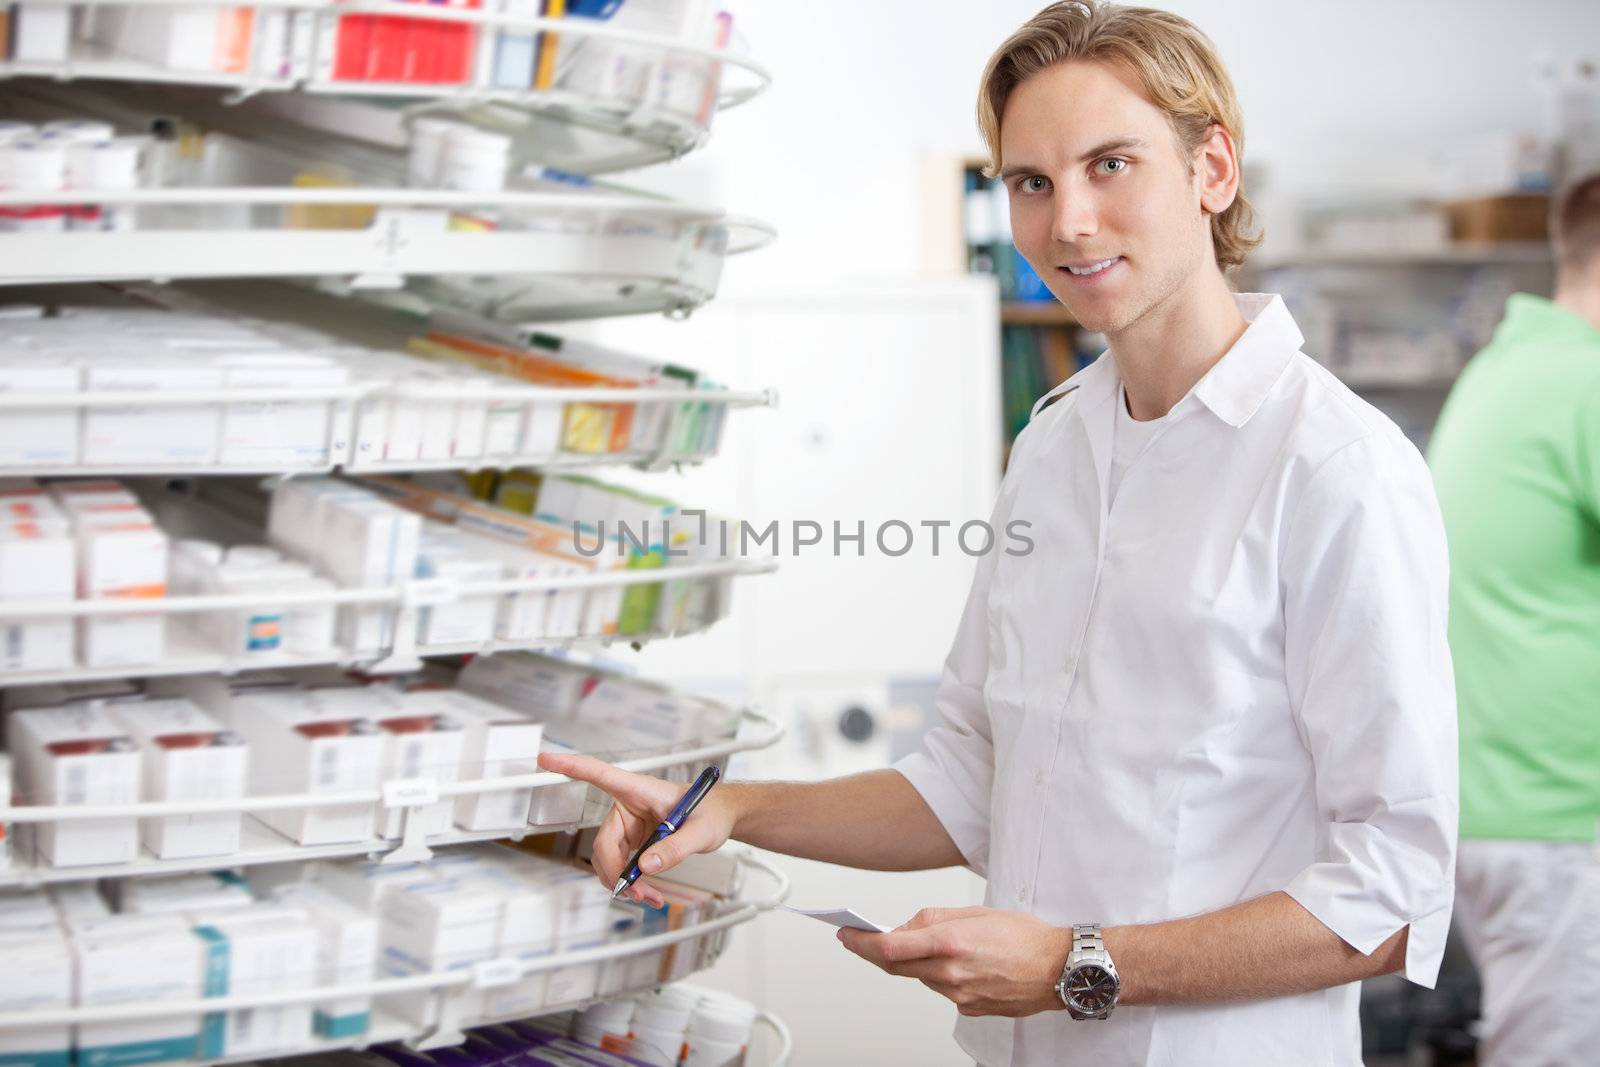 Pharmacist at Work by leaf